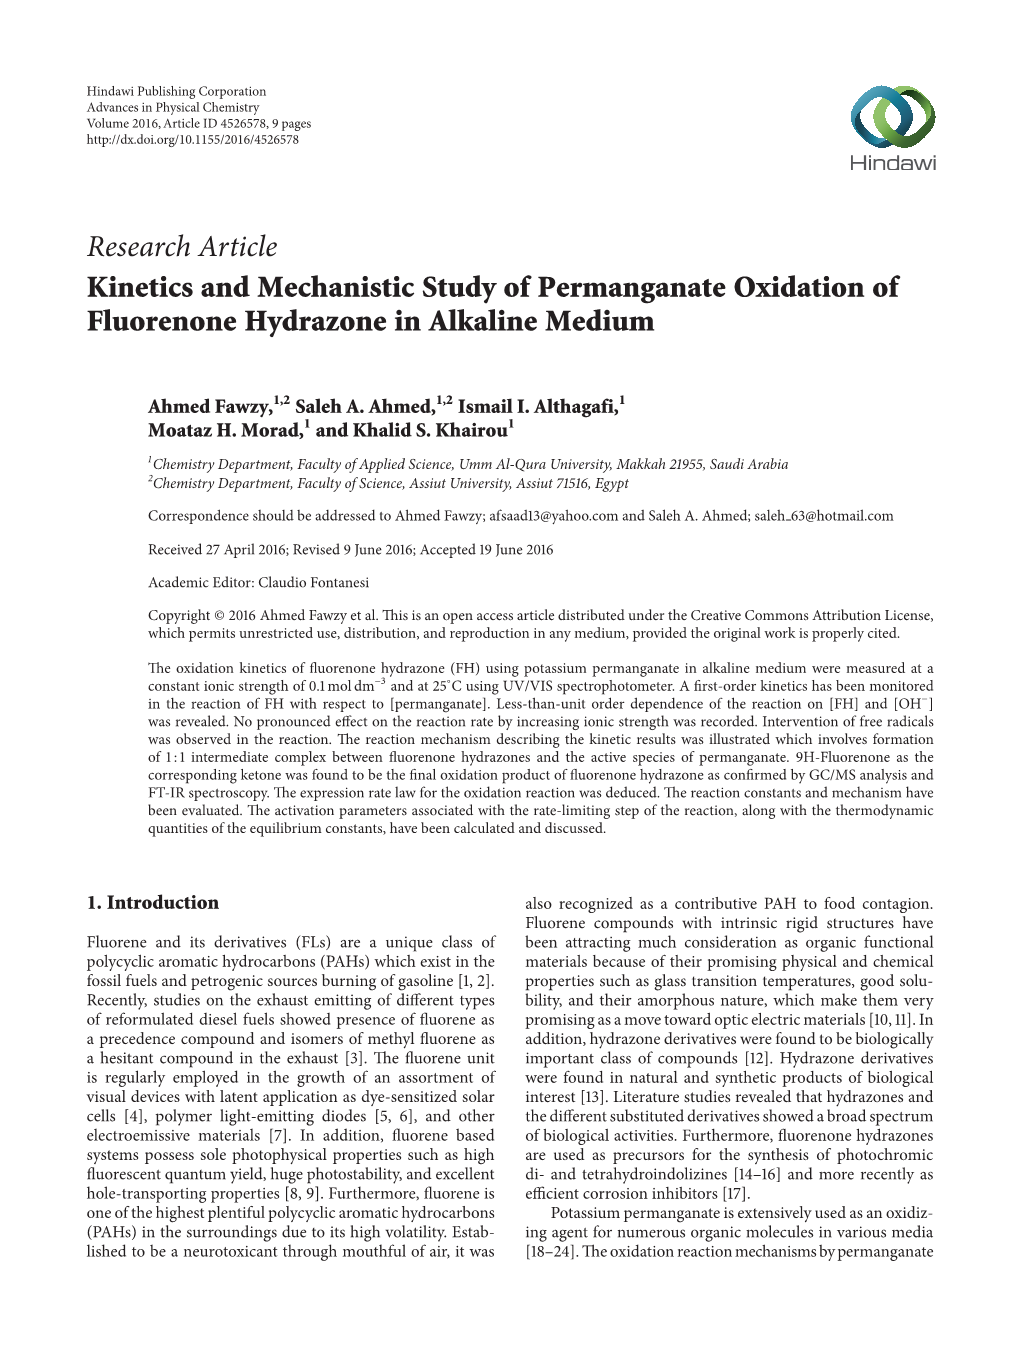 Kinetics and Mechanistic Study of Permanganate Oxidation of Fluorenone Hydrazone in Alkaline Medium